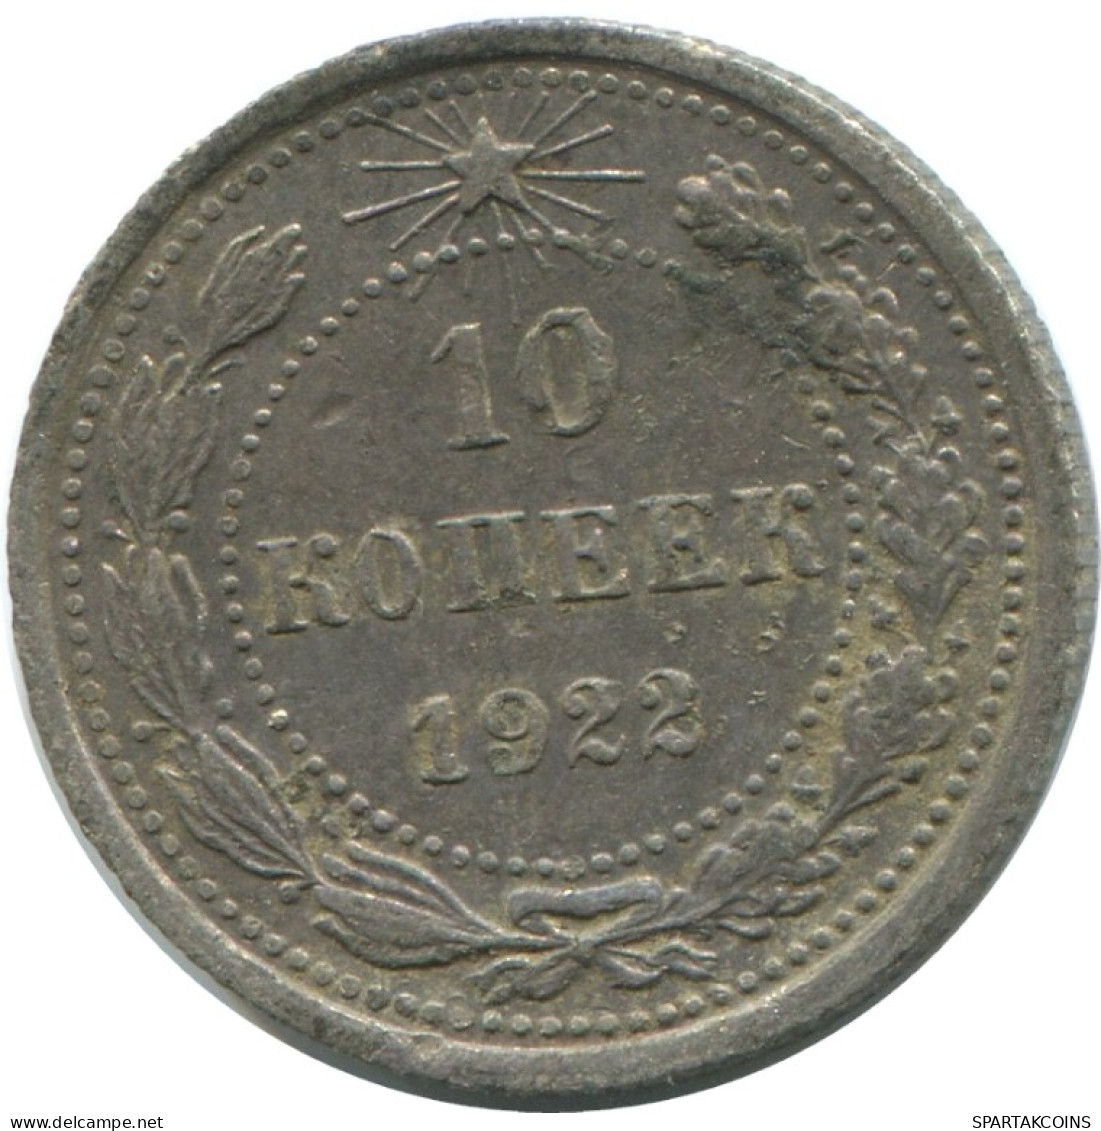 10 KOPEKS 1923 RUSSIA RSFSR SILVER Coin HIGH GRADE #AE878.4.U.A - Russland